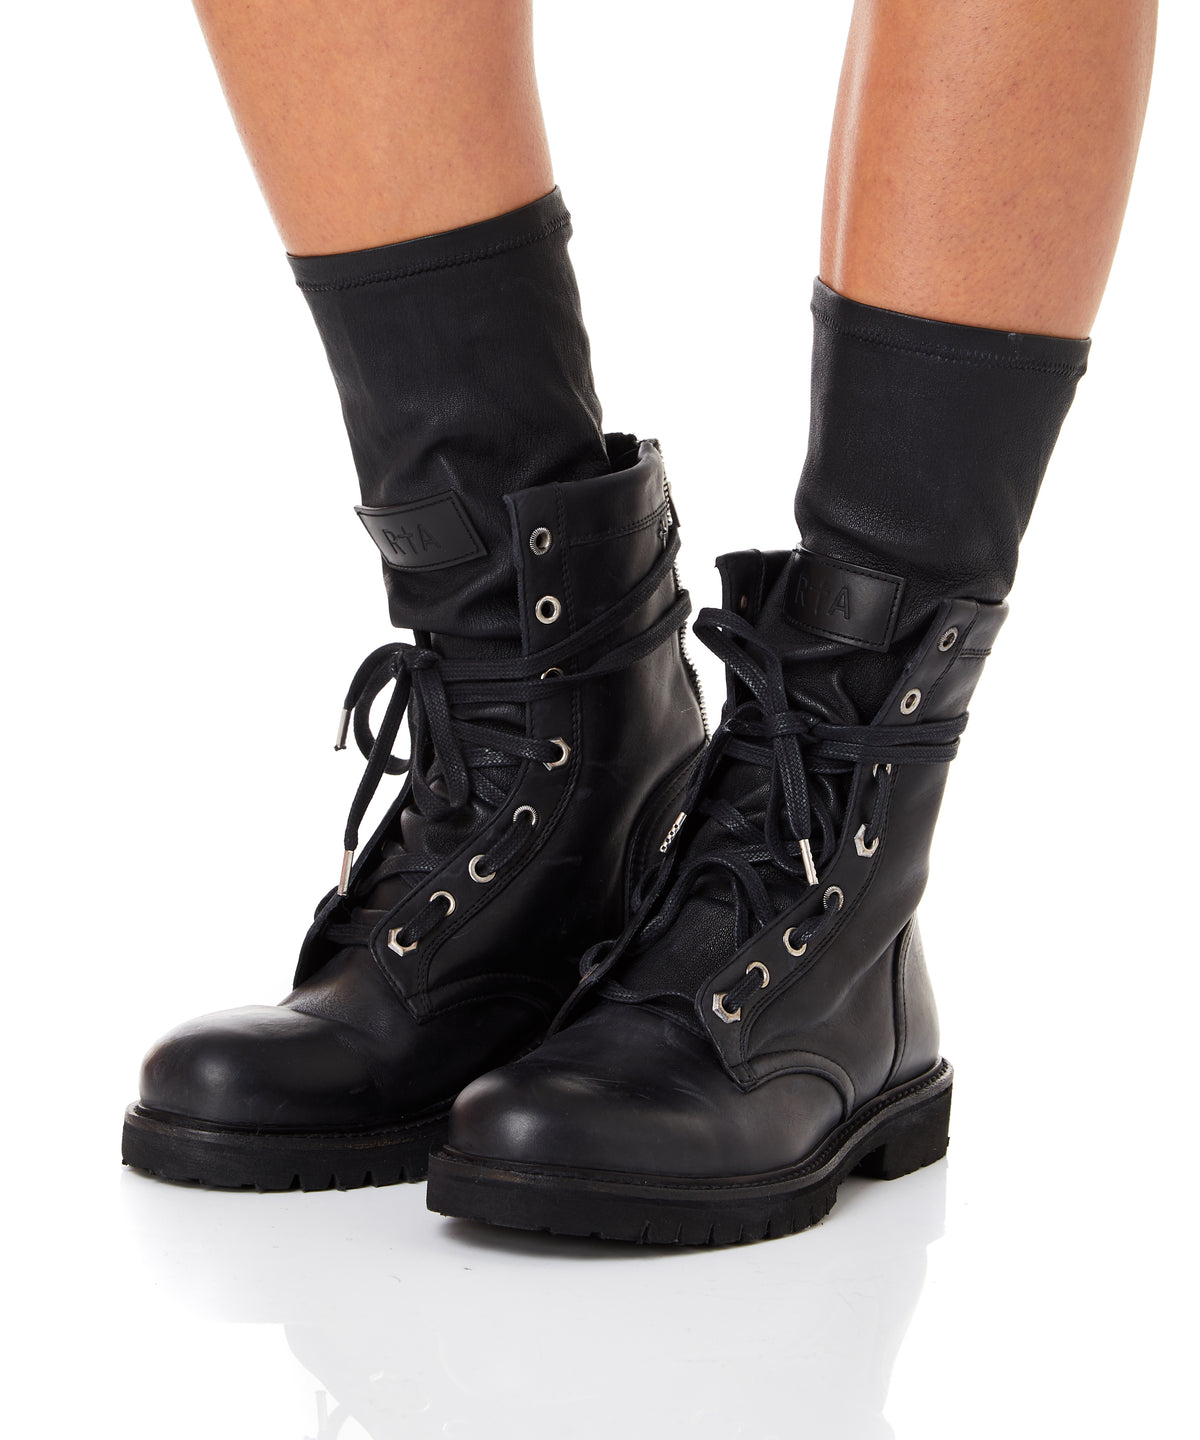 Women S Designer Boots Rta Hybrid Combat Black Boots The Box Boutique The Box Boutique